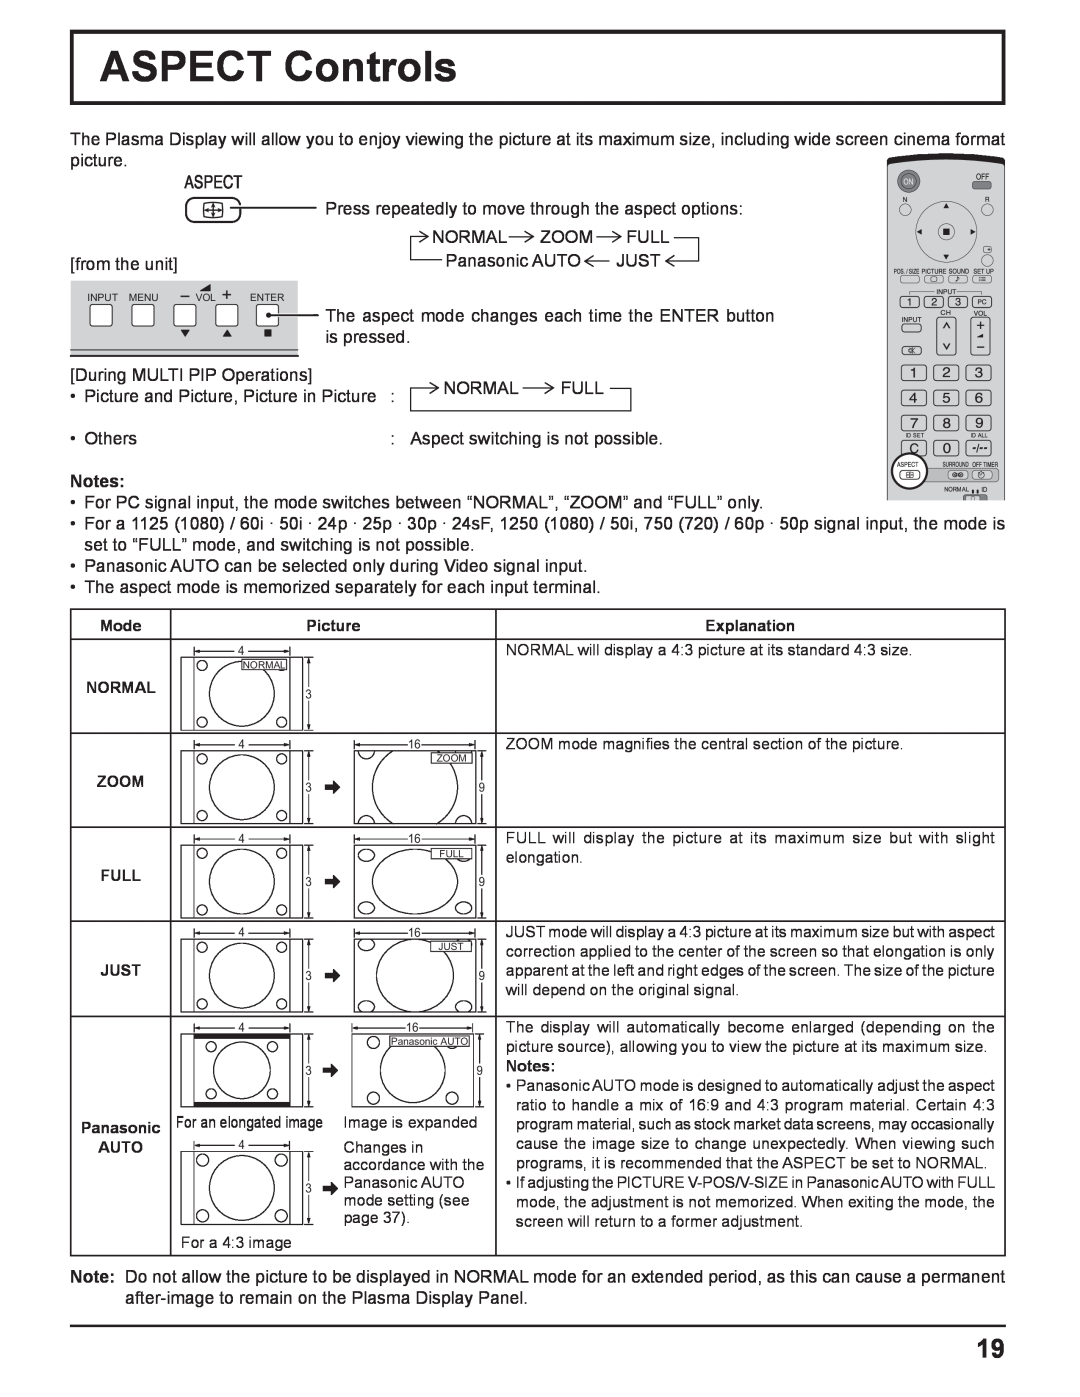 Panasonic TQBC2033 manual ASPECT Controls, Mode, Picture, Explanation, Normal, Zoom, Full, Just, Panasonic, Auto 